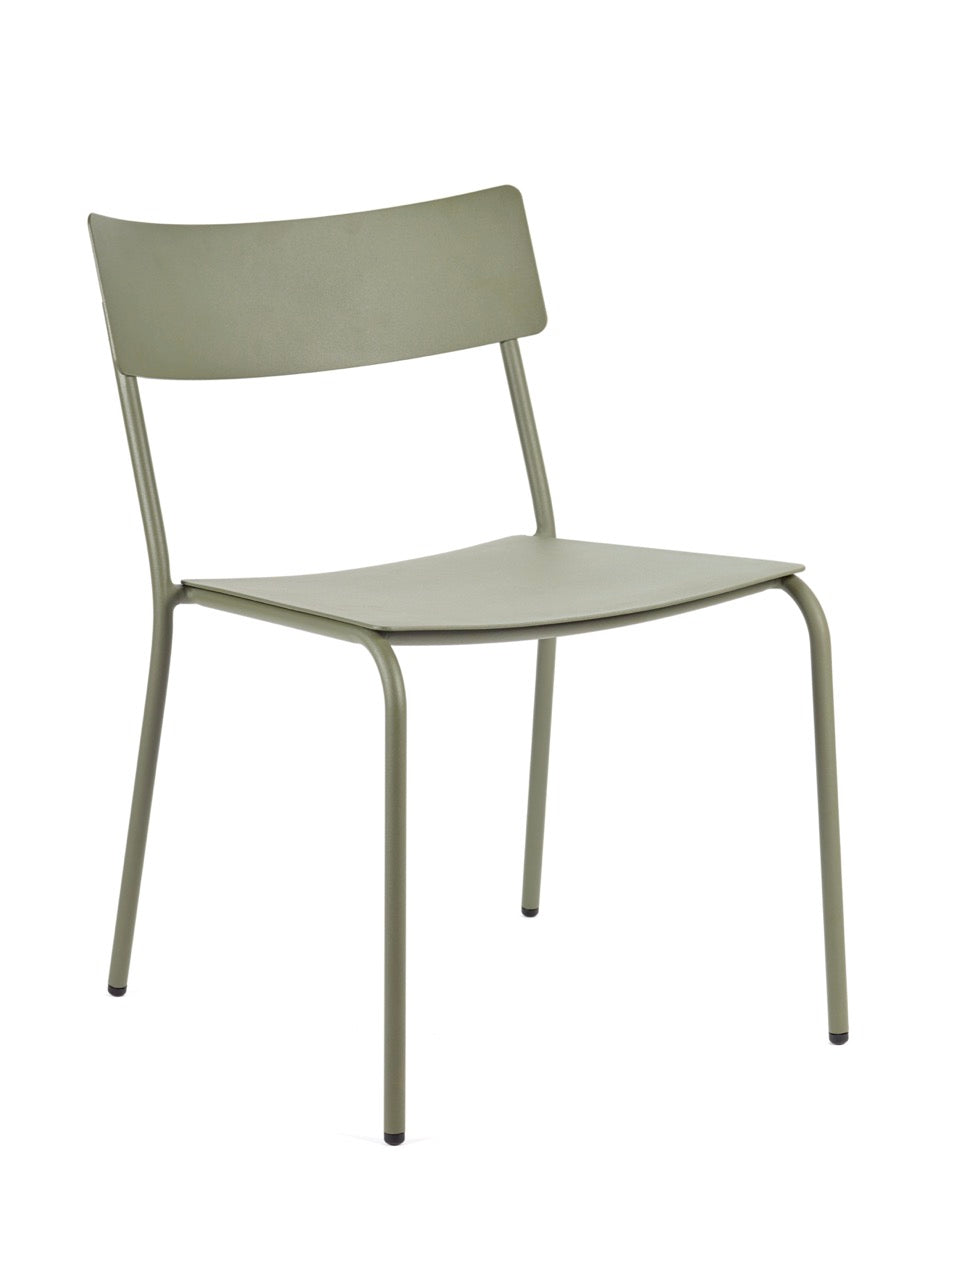 Serax August chair by Vincent Van Duysen set of 2